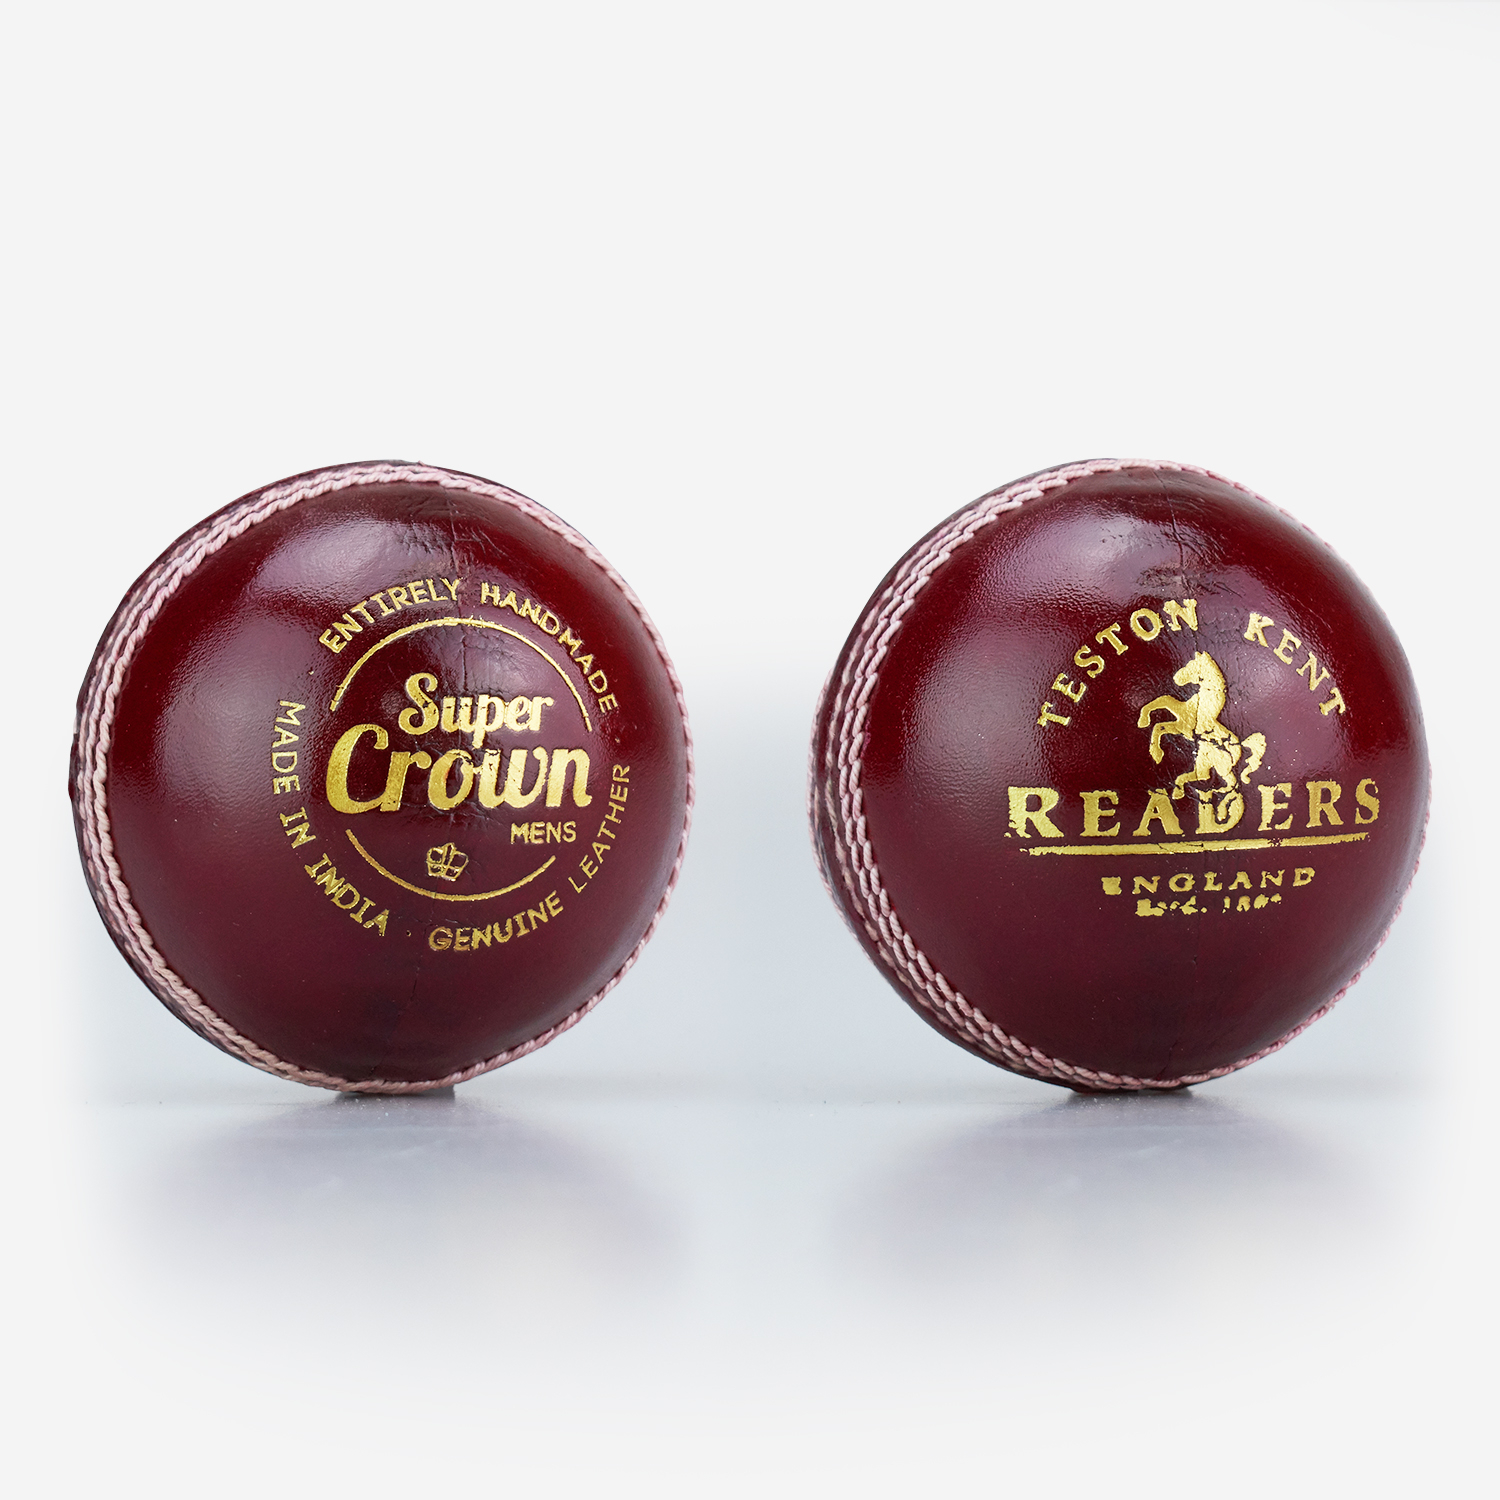 Readers Super Crown Cricket Ball 